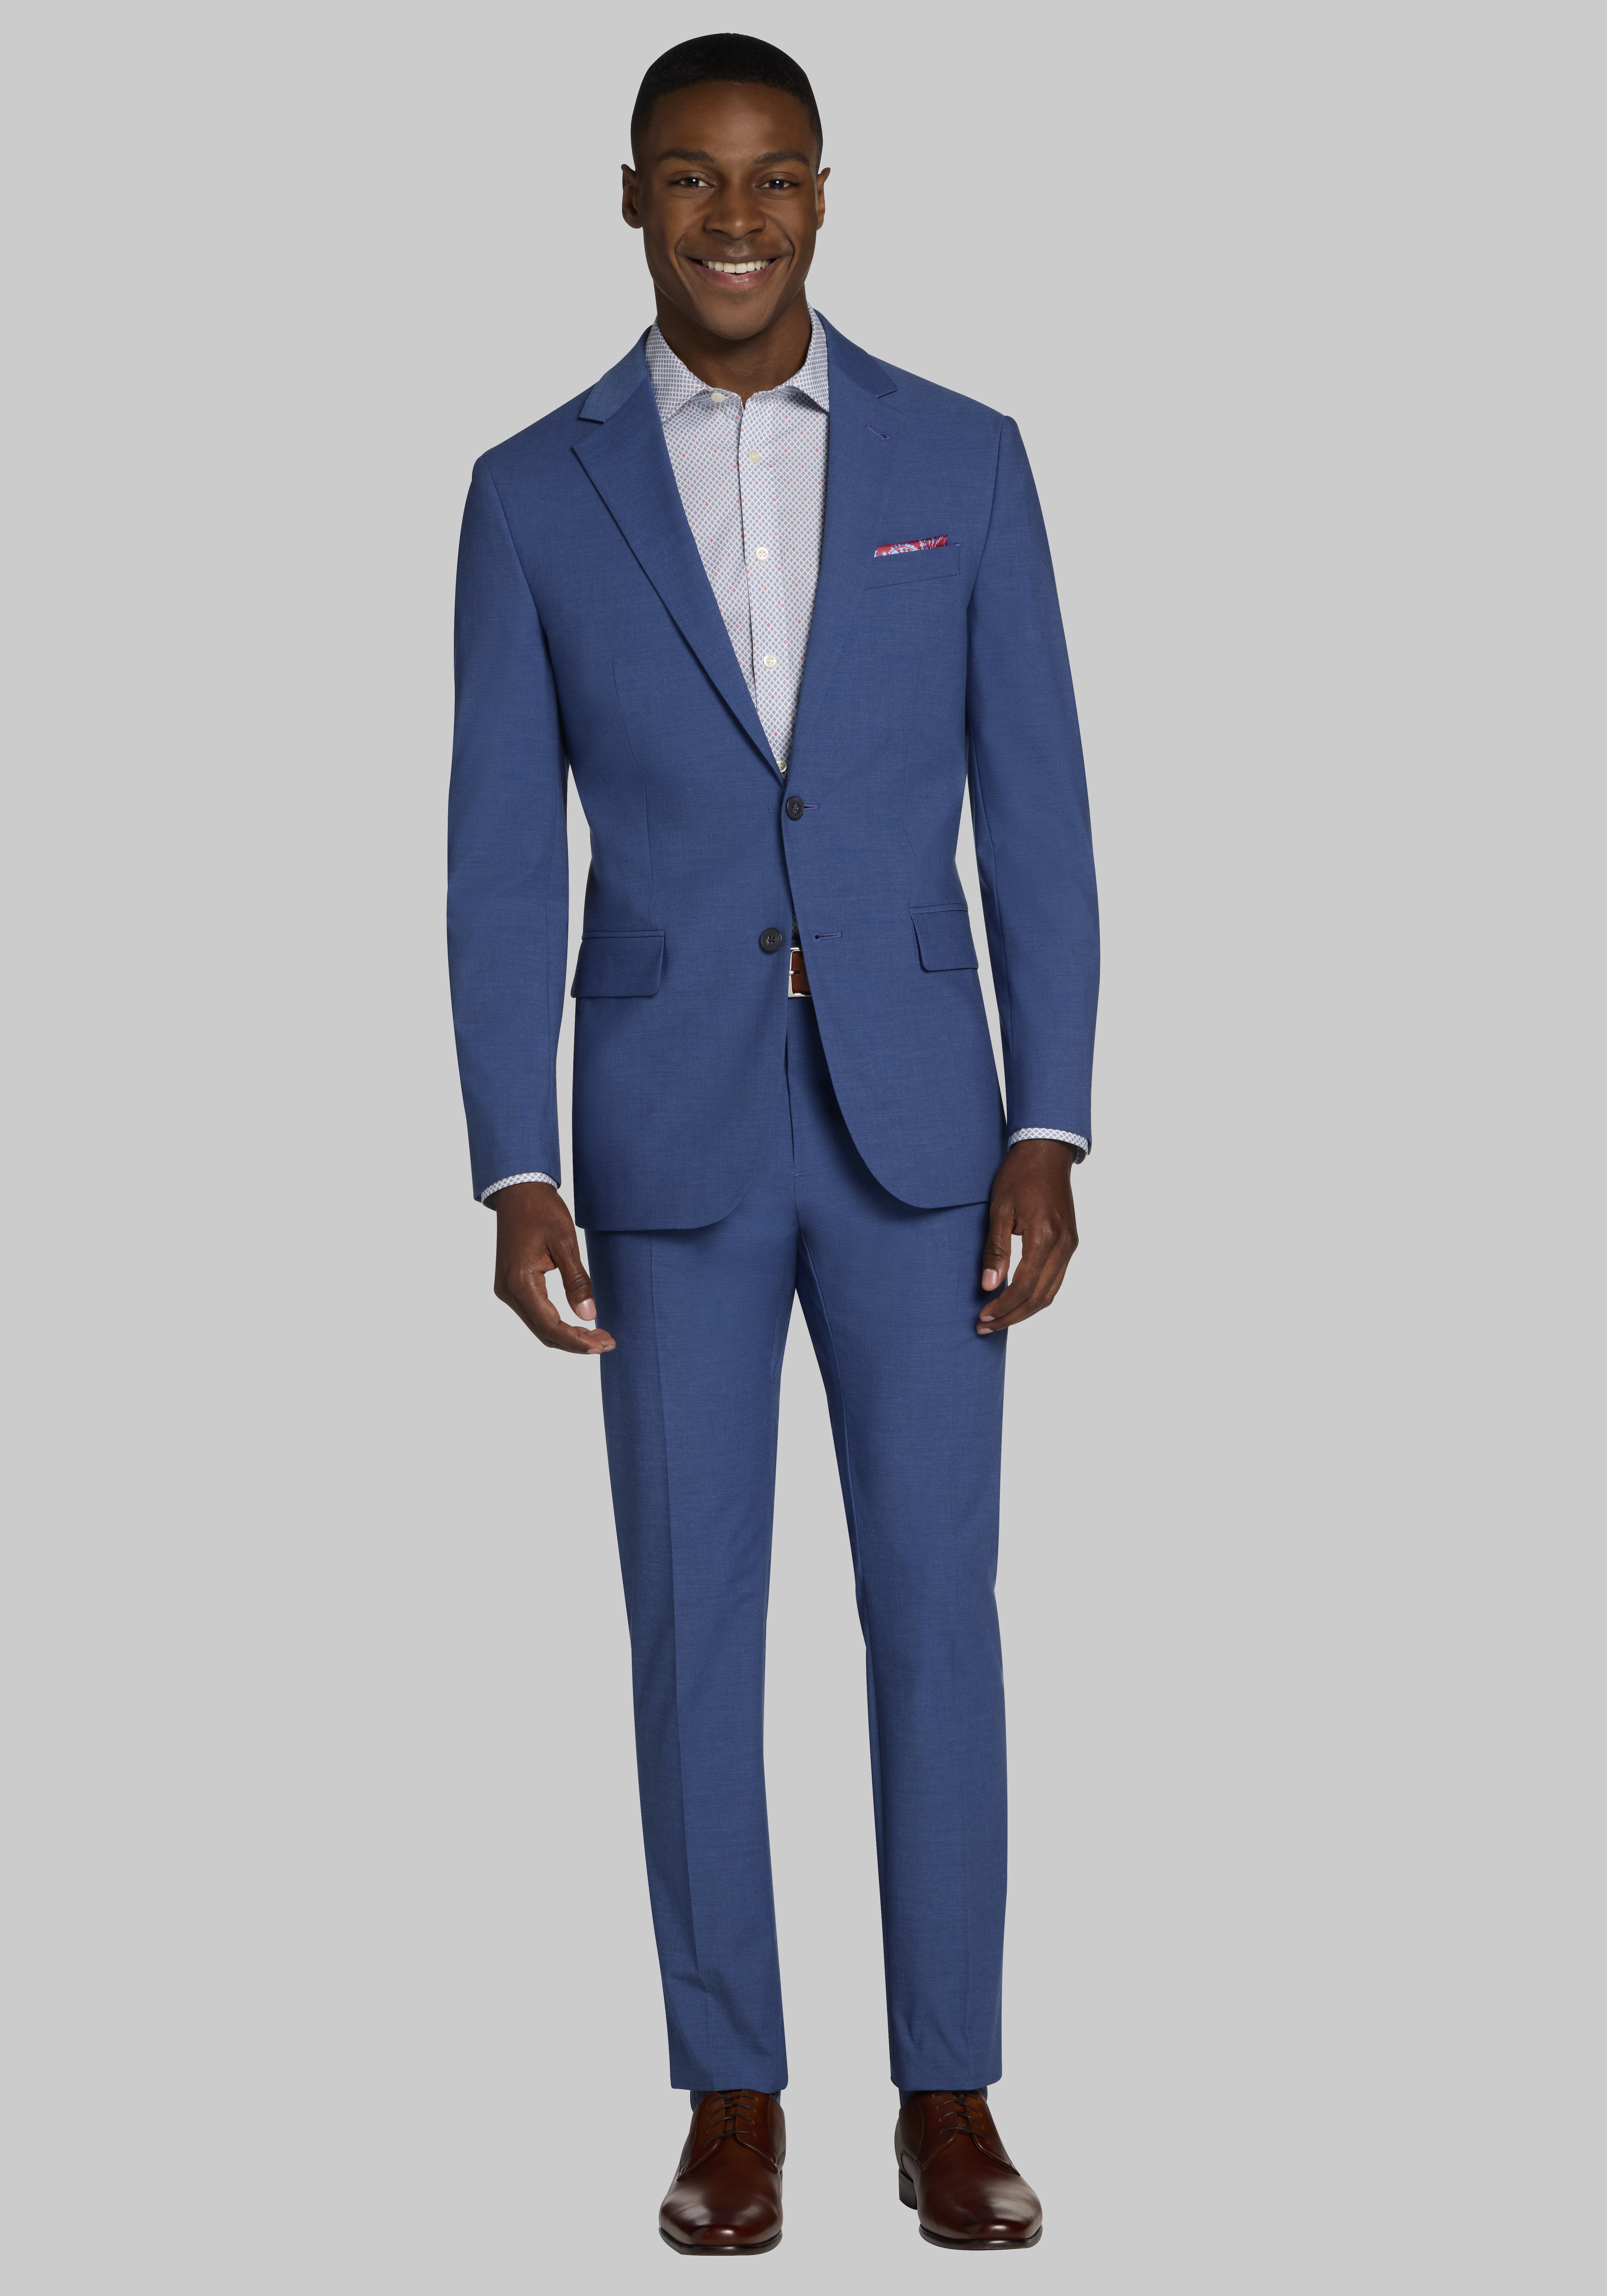 Jos. A. Bank Slim Fit Suit Separates Jacket - Big & Tall - New Arrivals ...